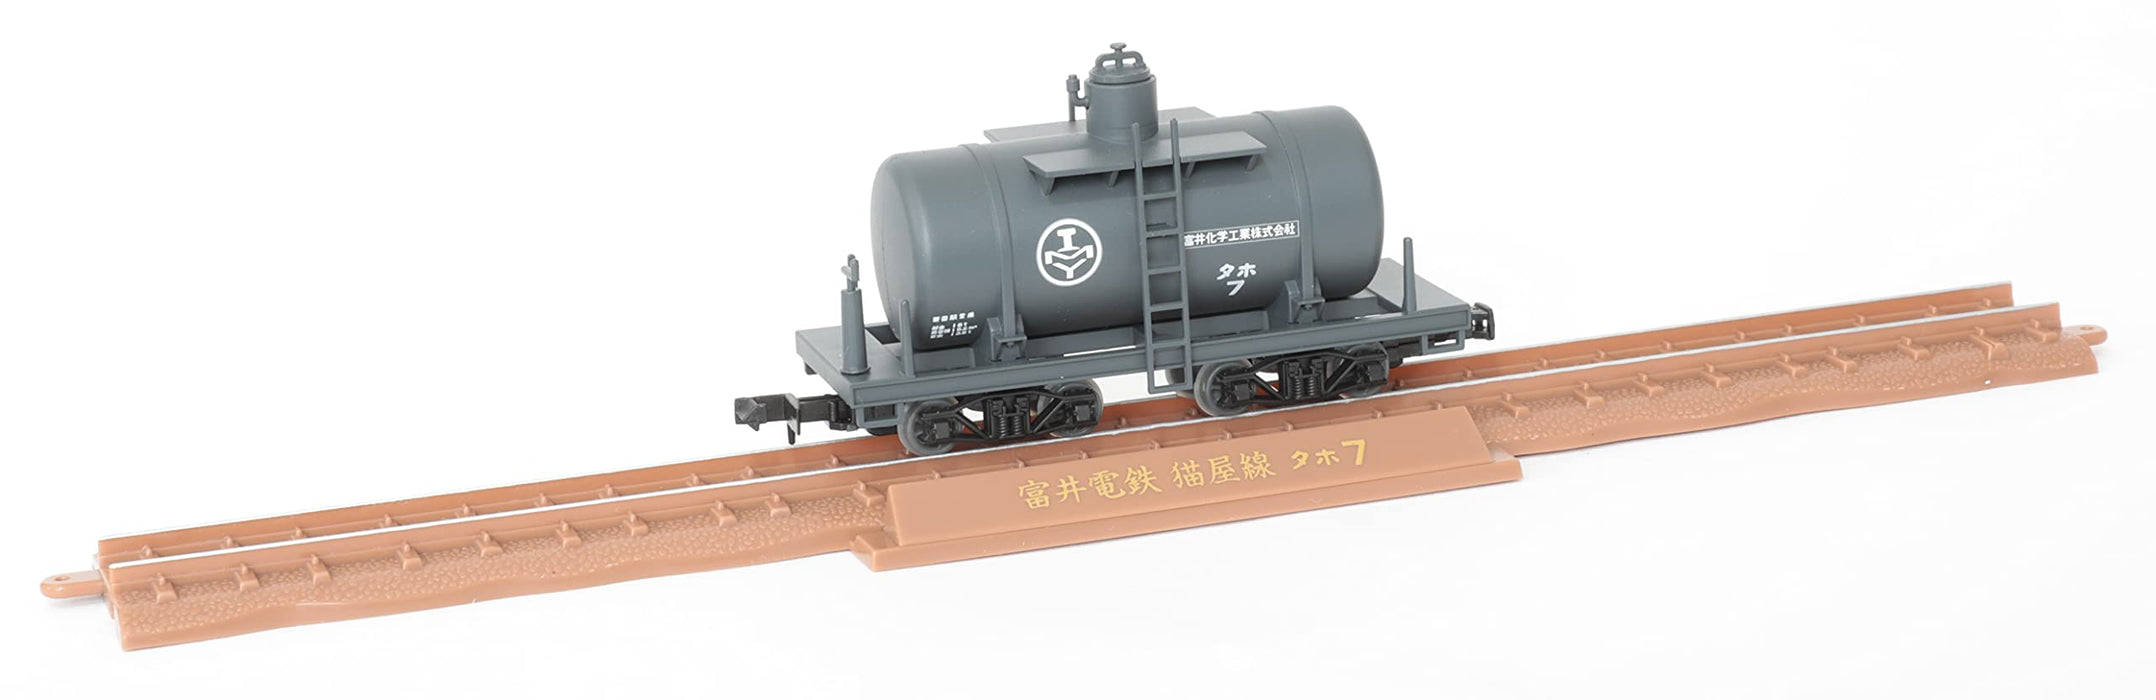 Tomytec Railway Collection Nekoya Line Small Tank Wagon 2-Car Set Limited Production Diorama Supplies